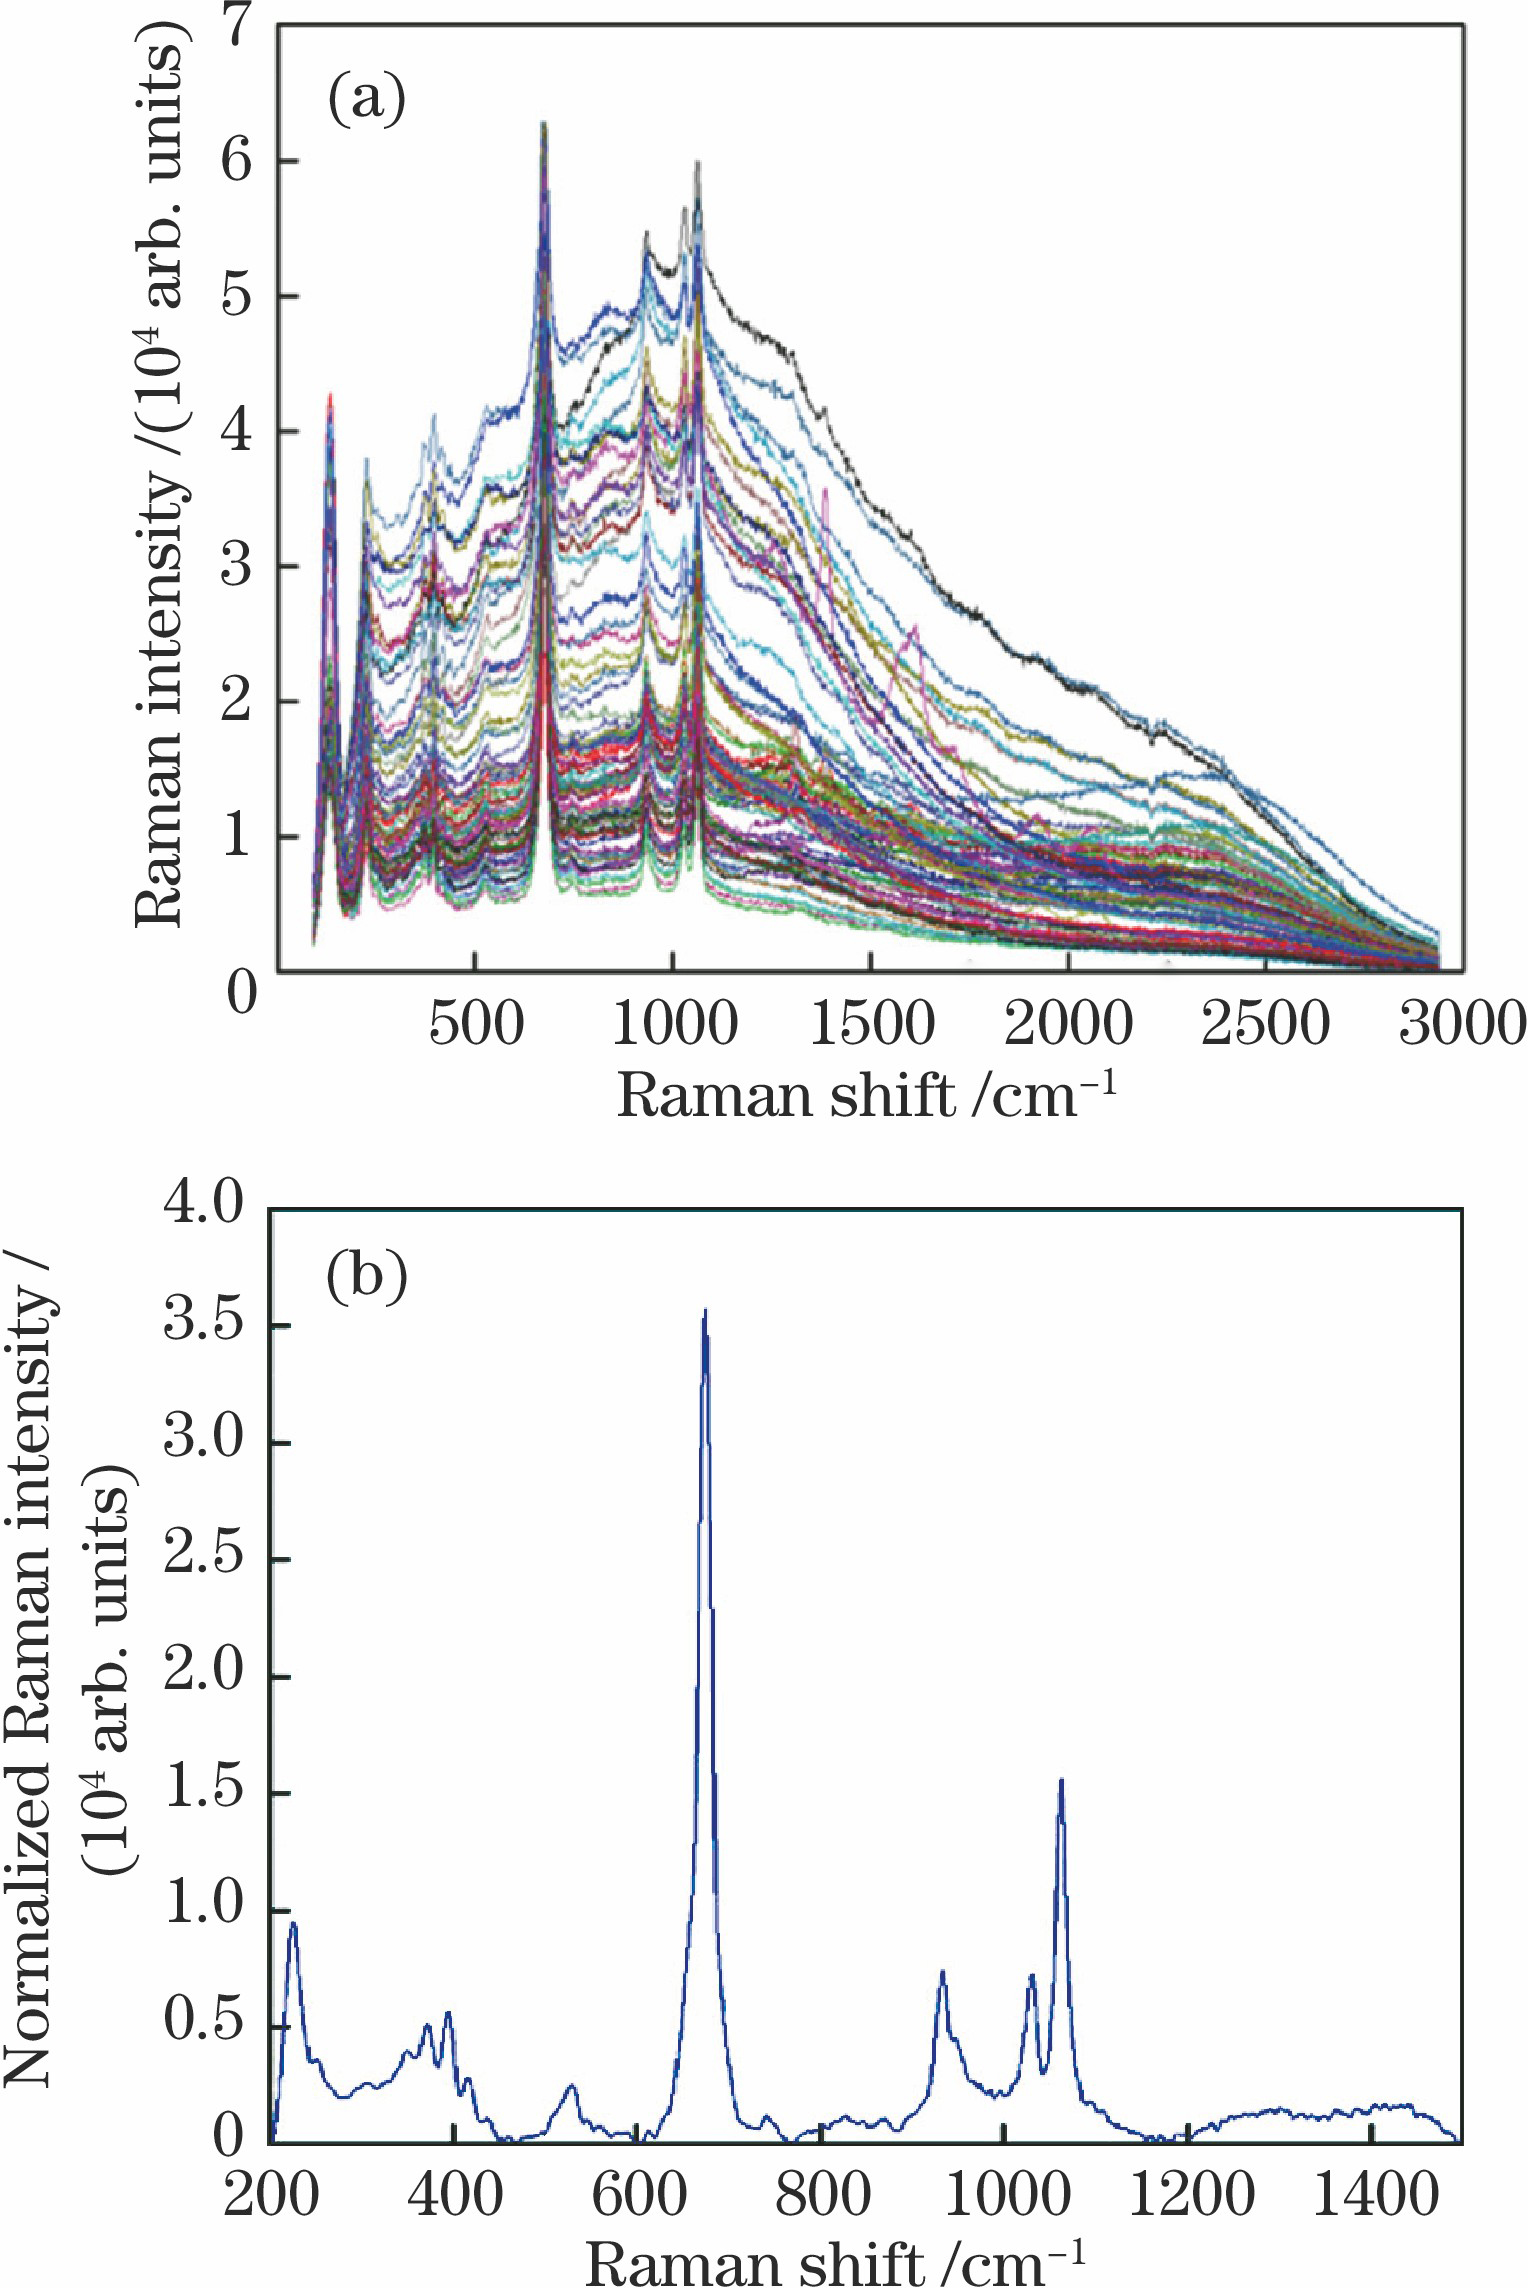 Raman spectra of nephrite samples. (a) Original spectra; (b) pretreated spectrum